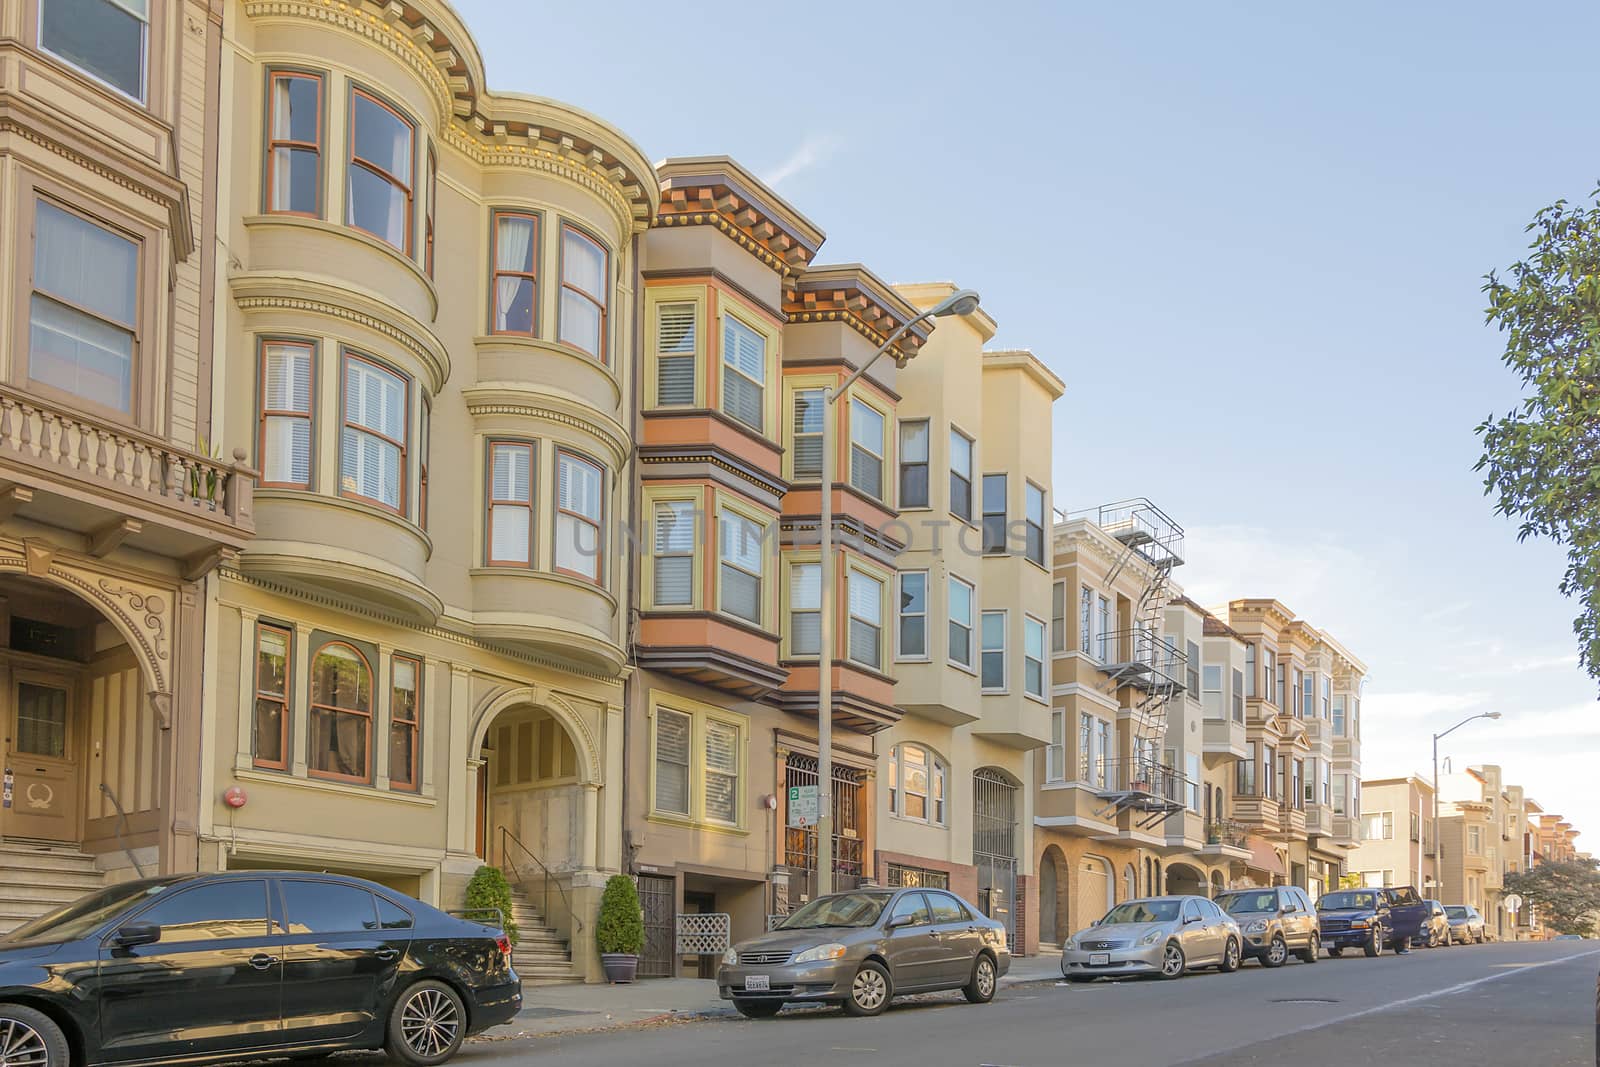 San Francisco, CA, USA, october 23, 2016: row of apartments in San Francisco